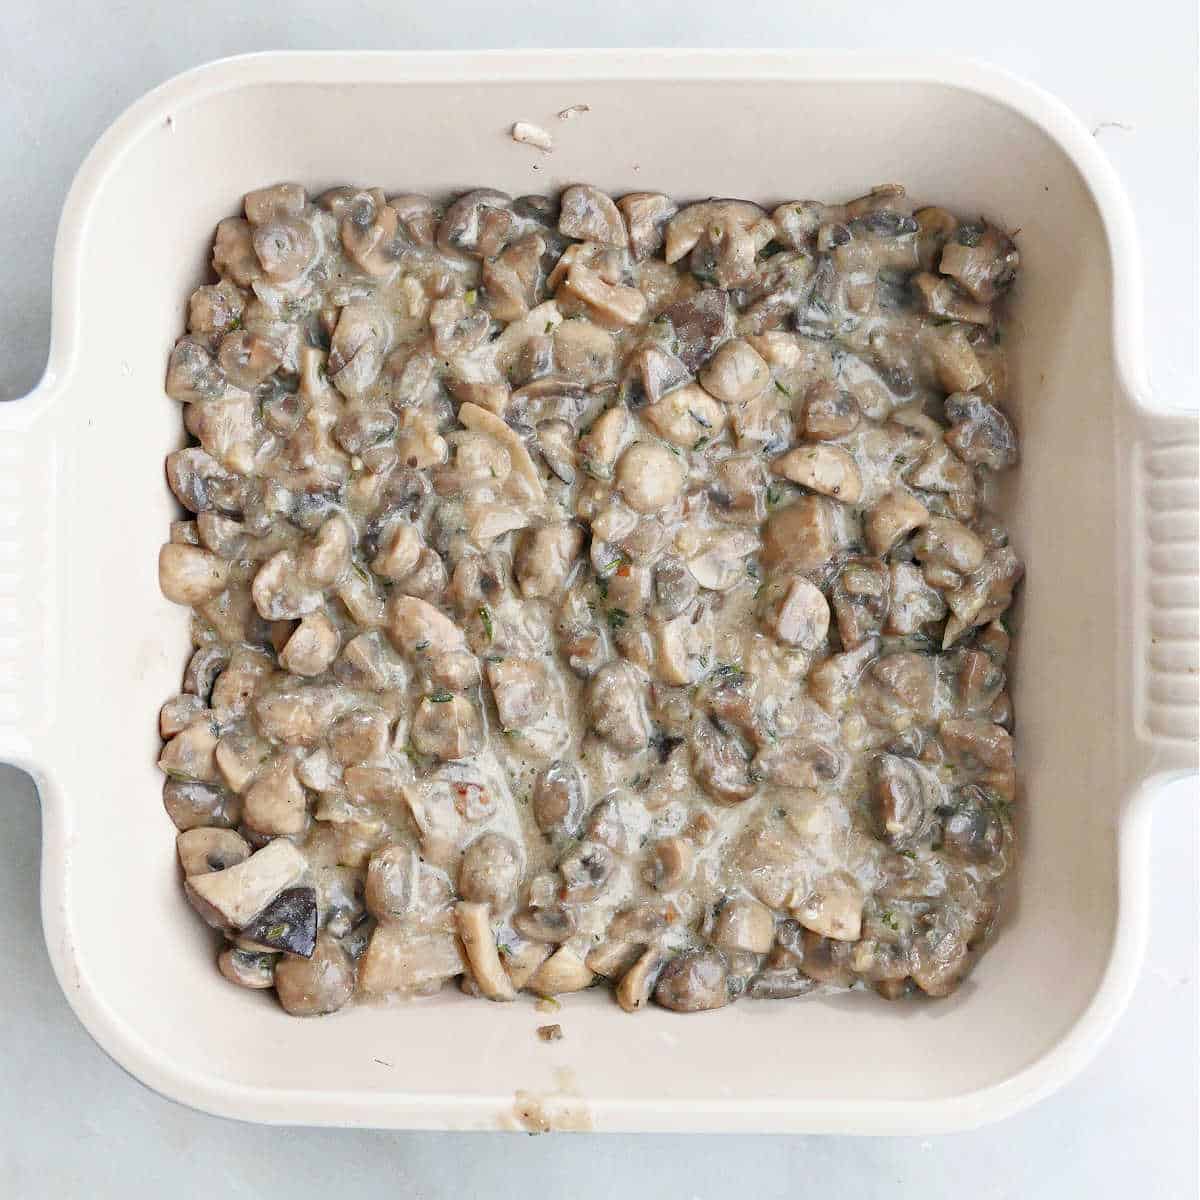 mushroom gratin filling in a square baking dish